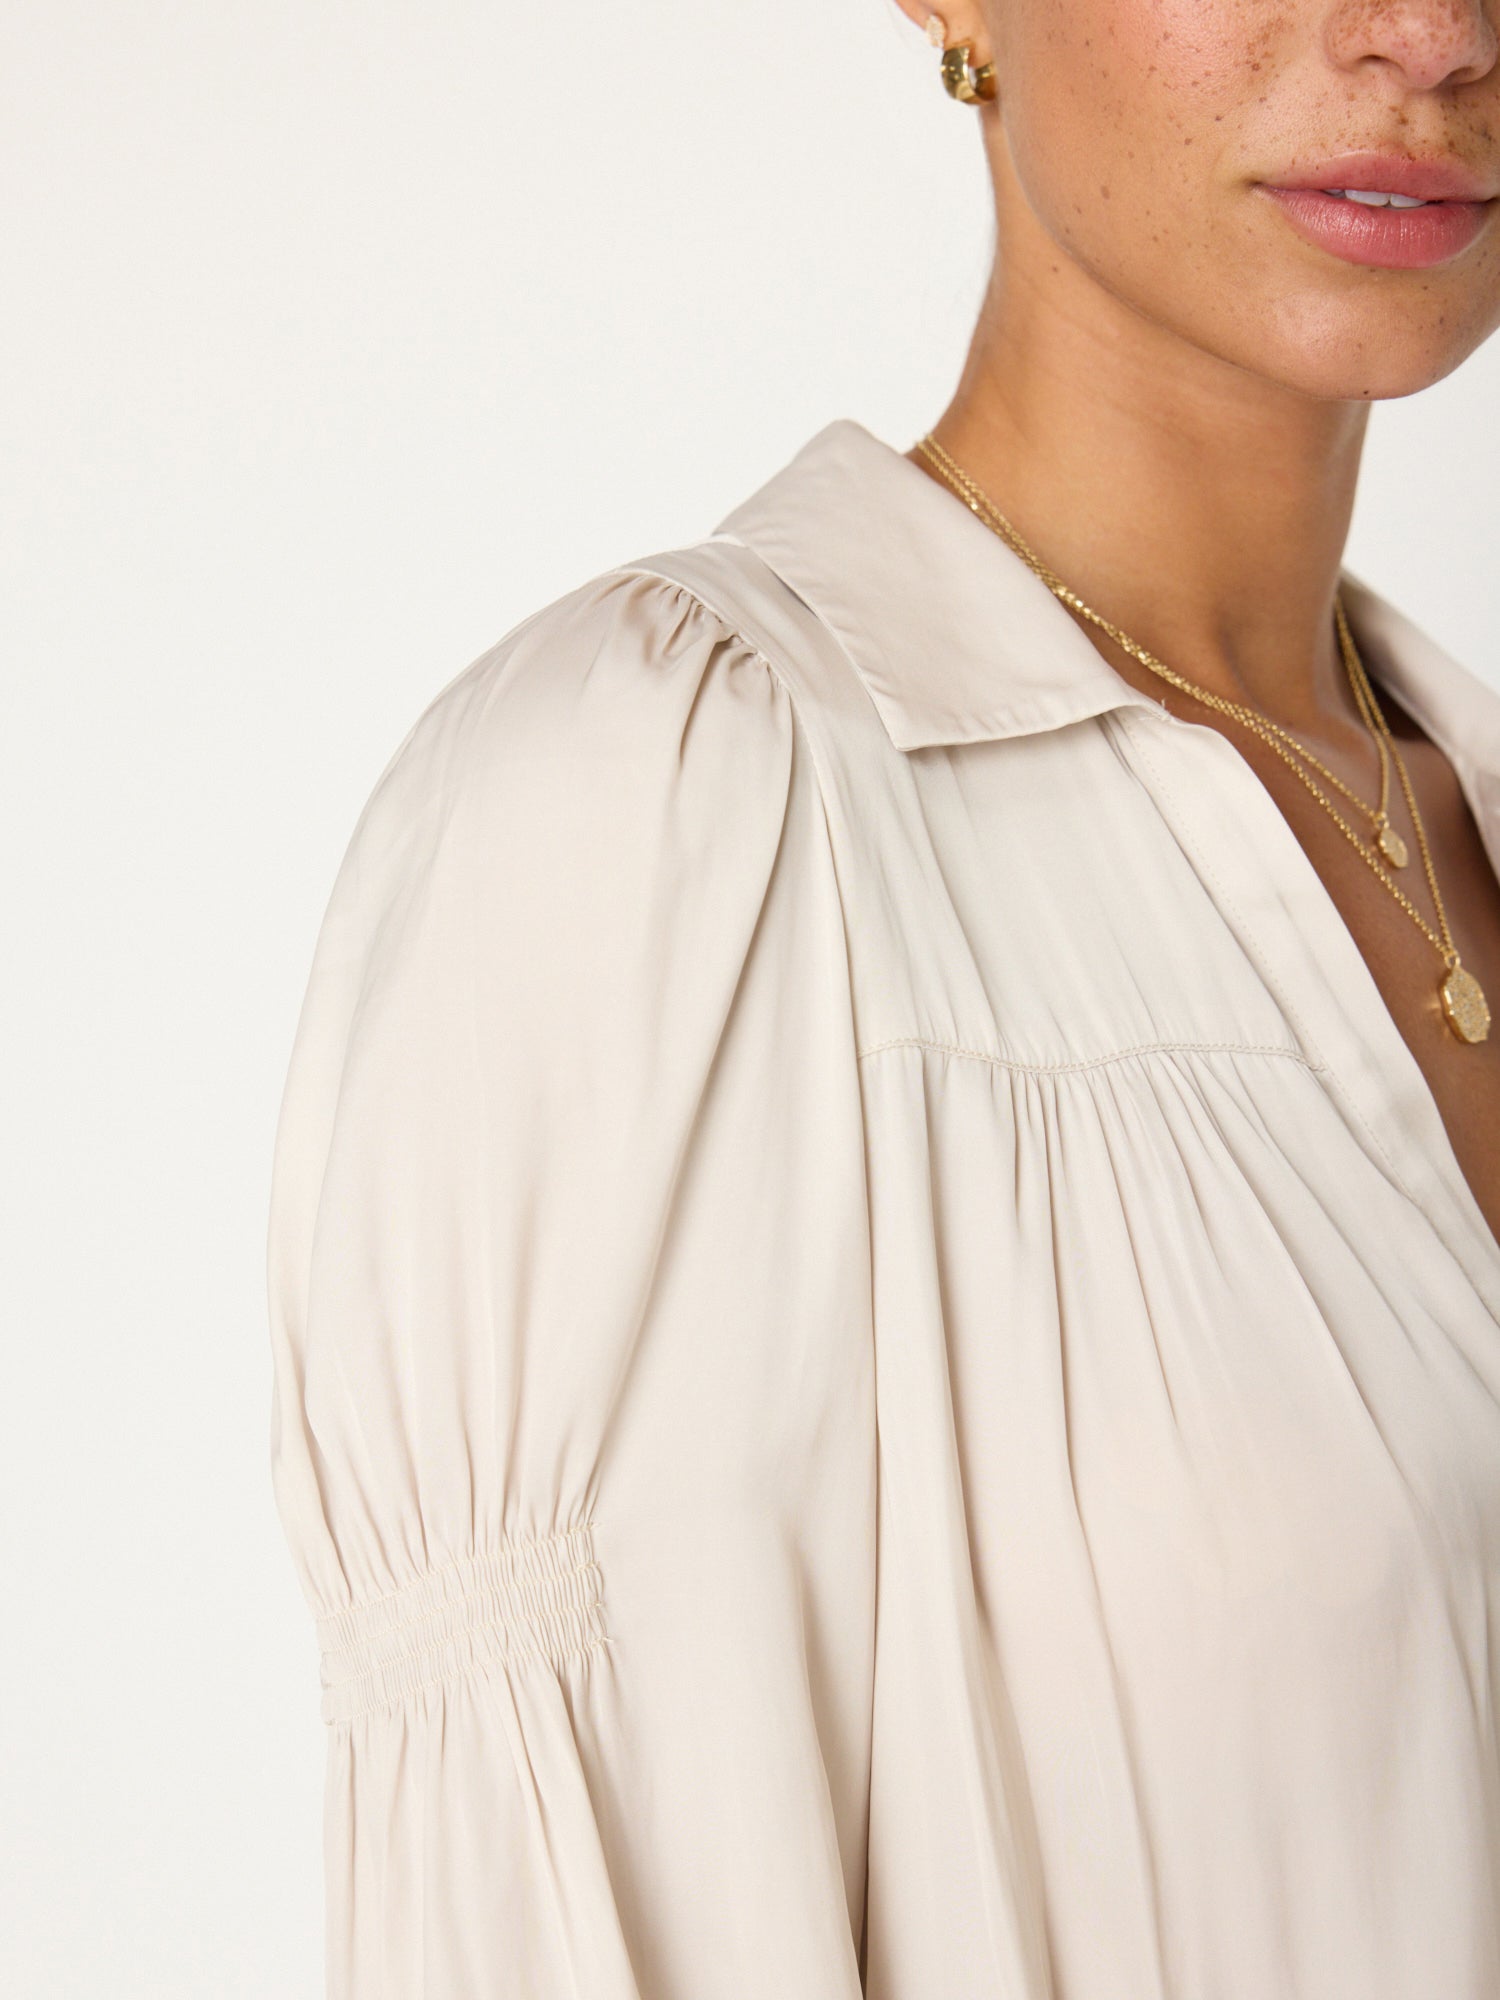 Anson white v-neck blouse close up